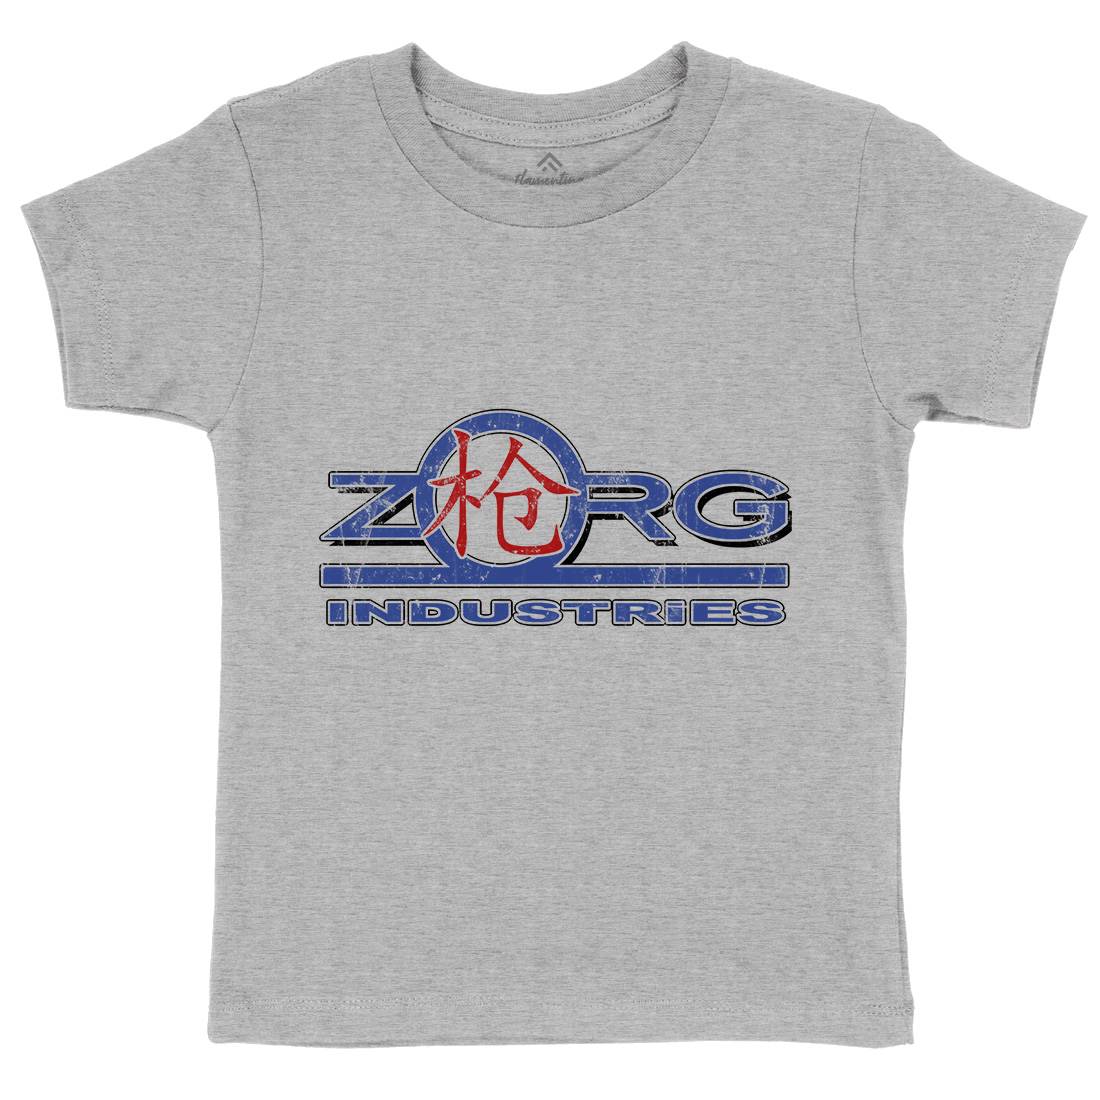 Zorg Ind Kids Crew Neck T-Shirt Space D105